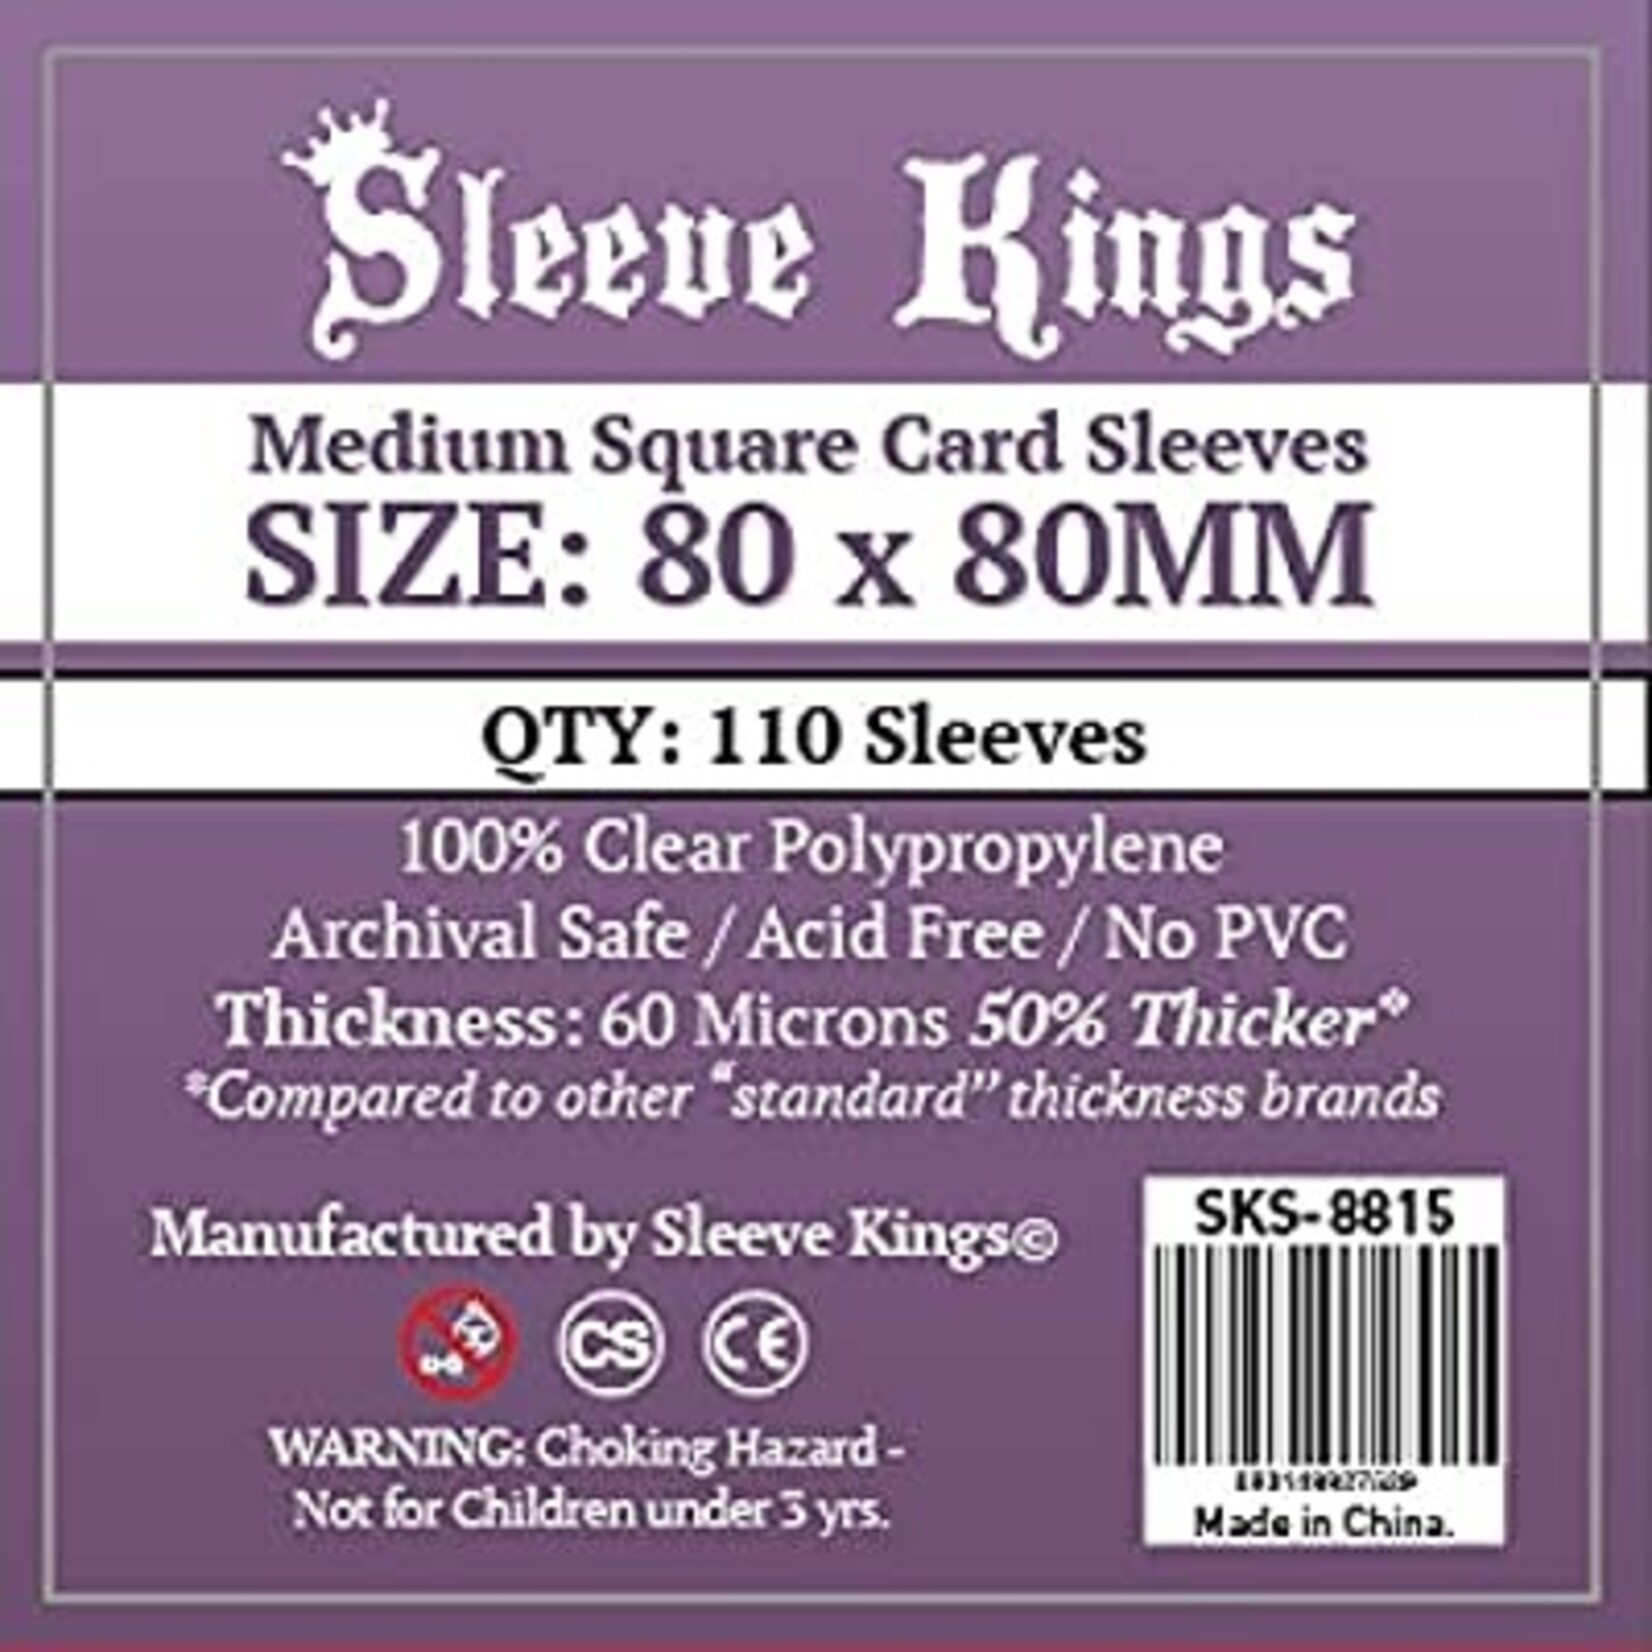 Sleeve Kings SK Medium Square